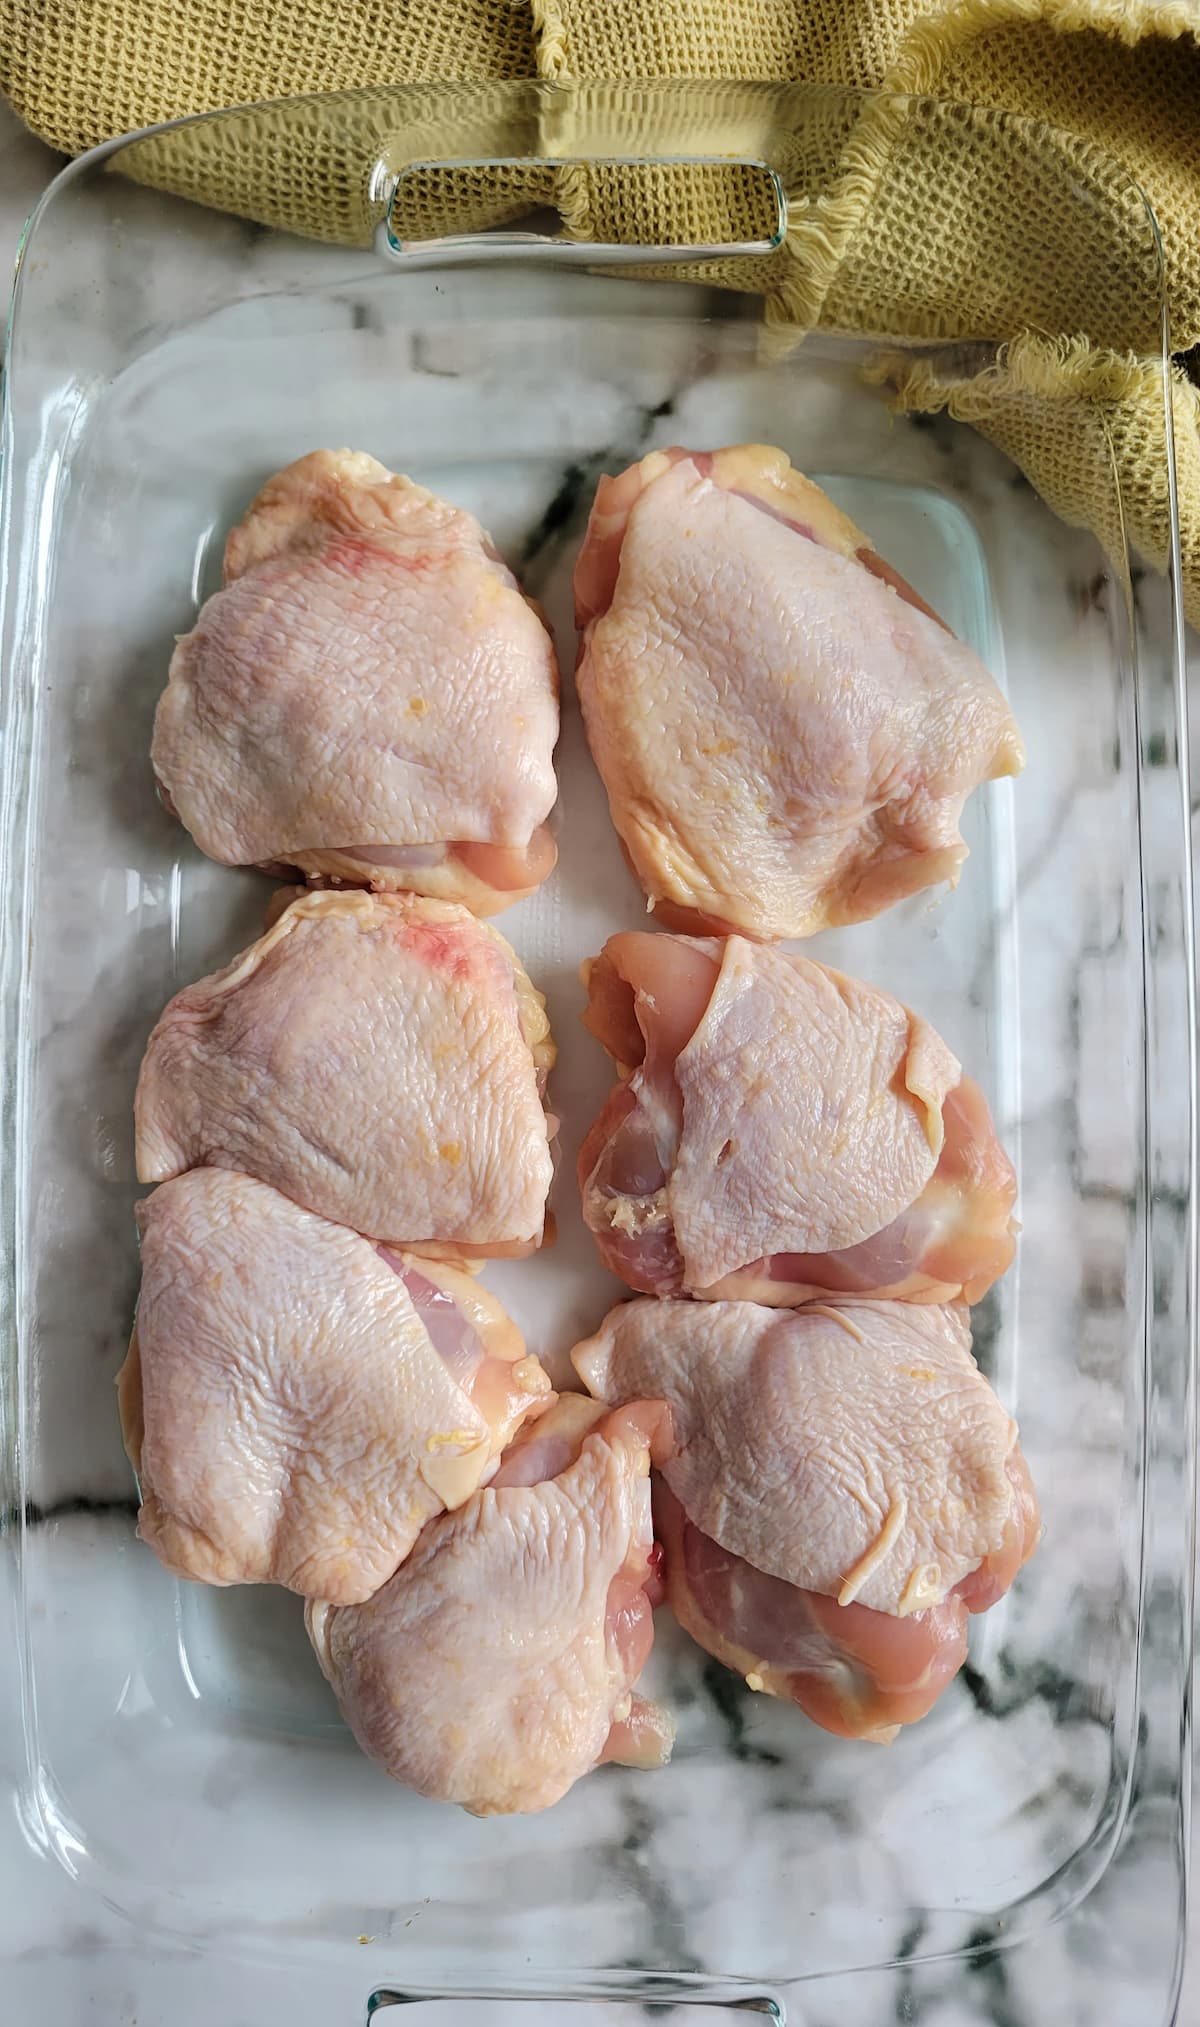 7 raw chicken thighs in a casserole dish